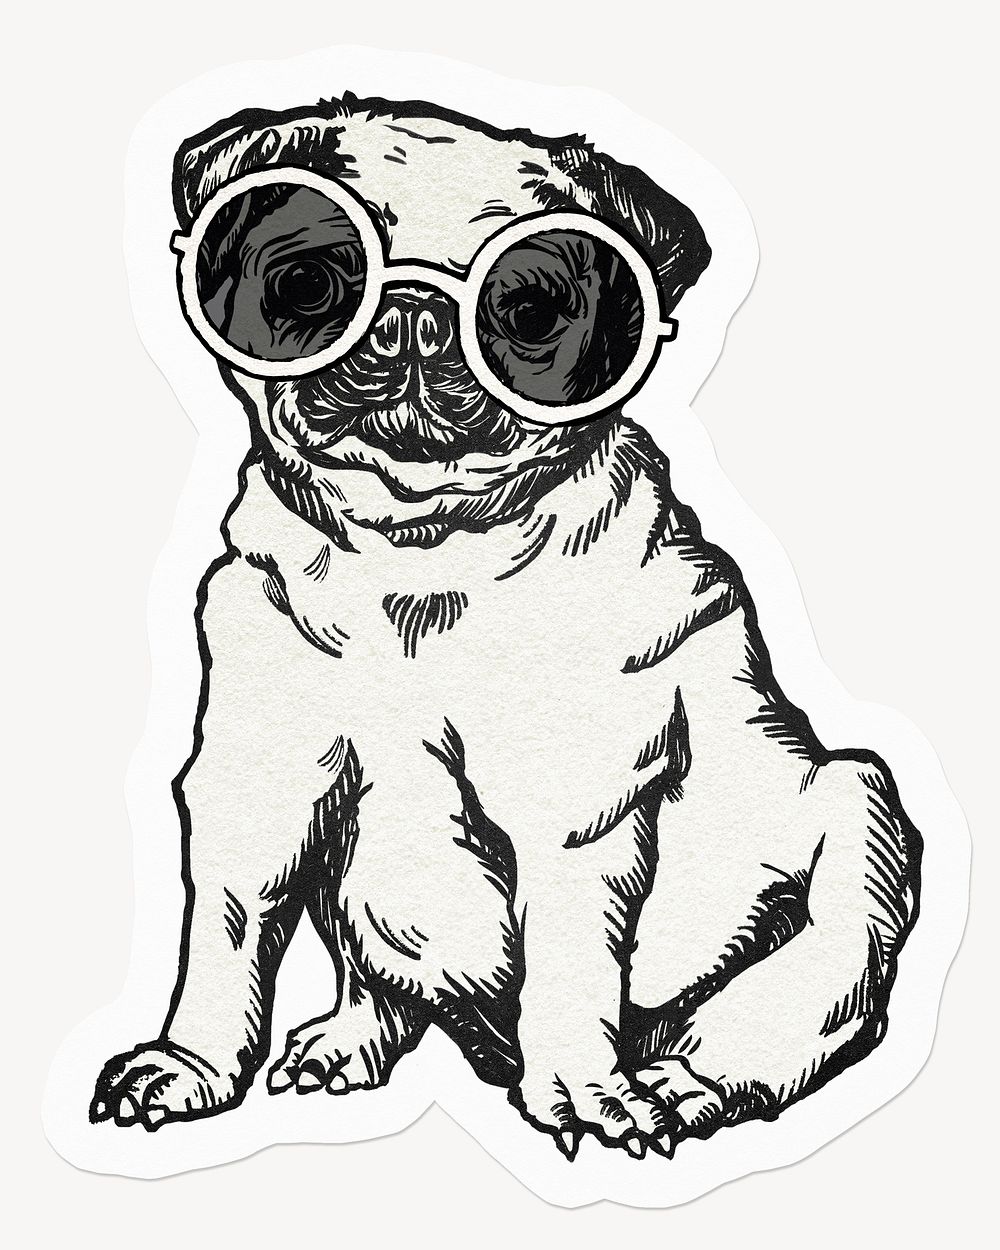 Pug dog wearing vintage sunglasses, drawing illustration